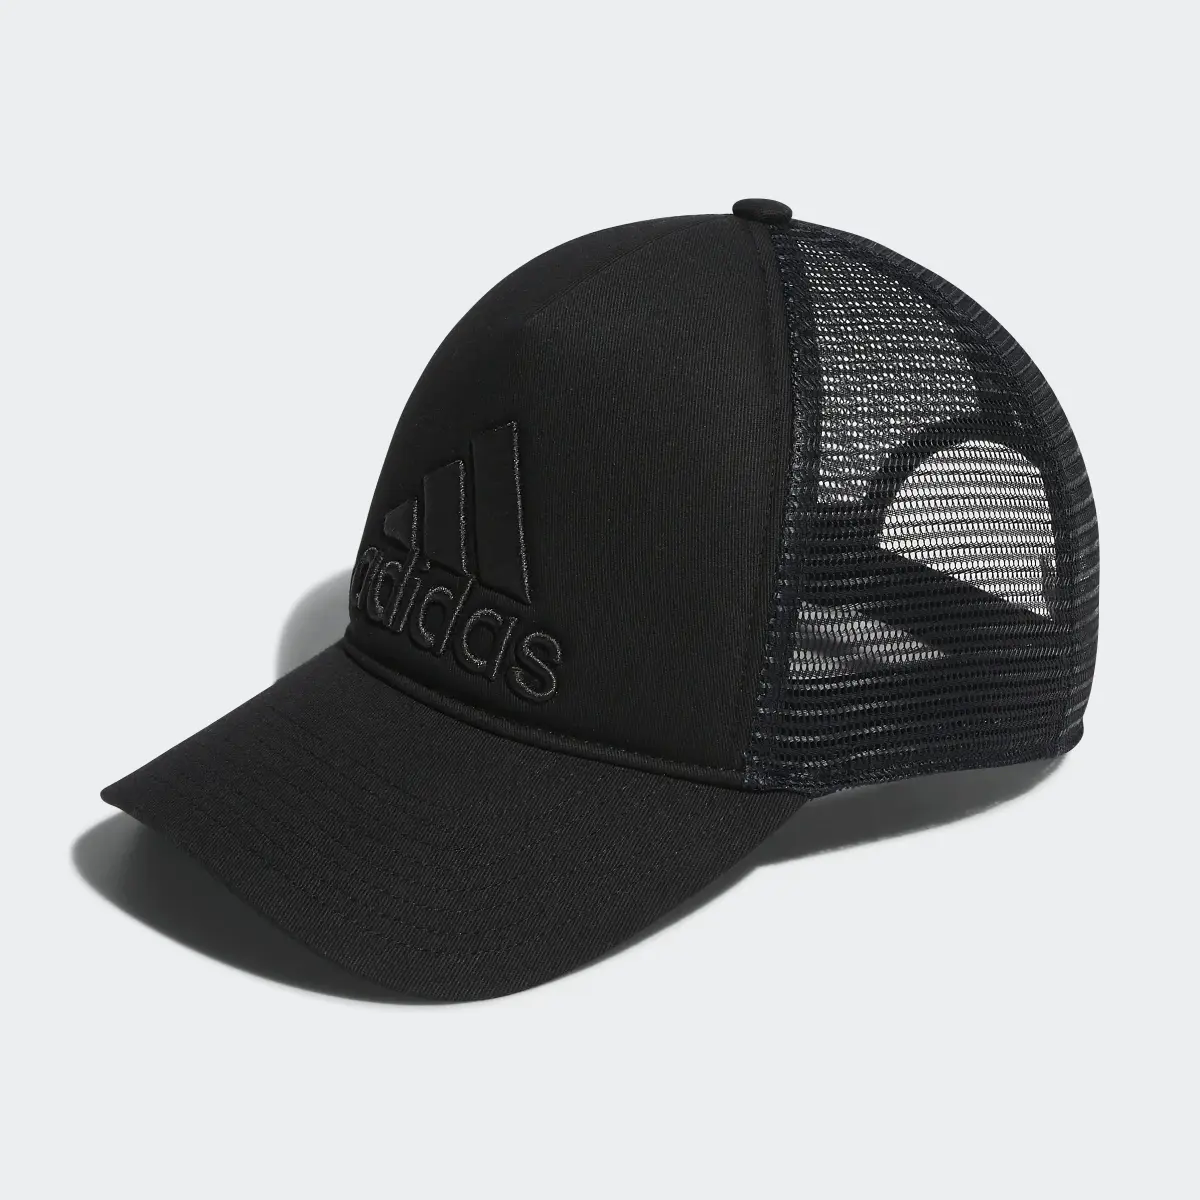 Adidas Trucker Cap. 2